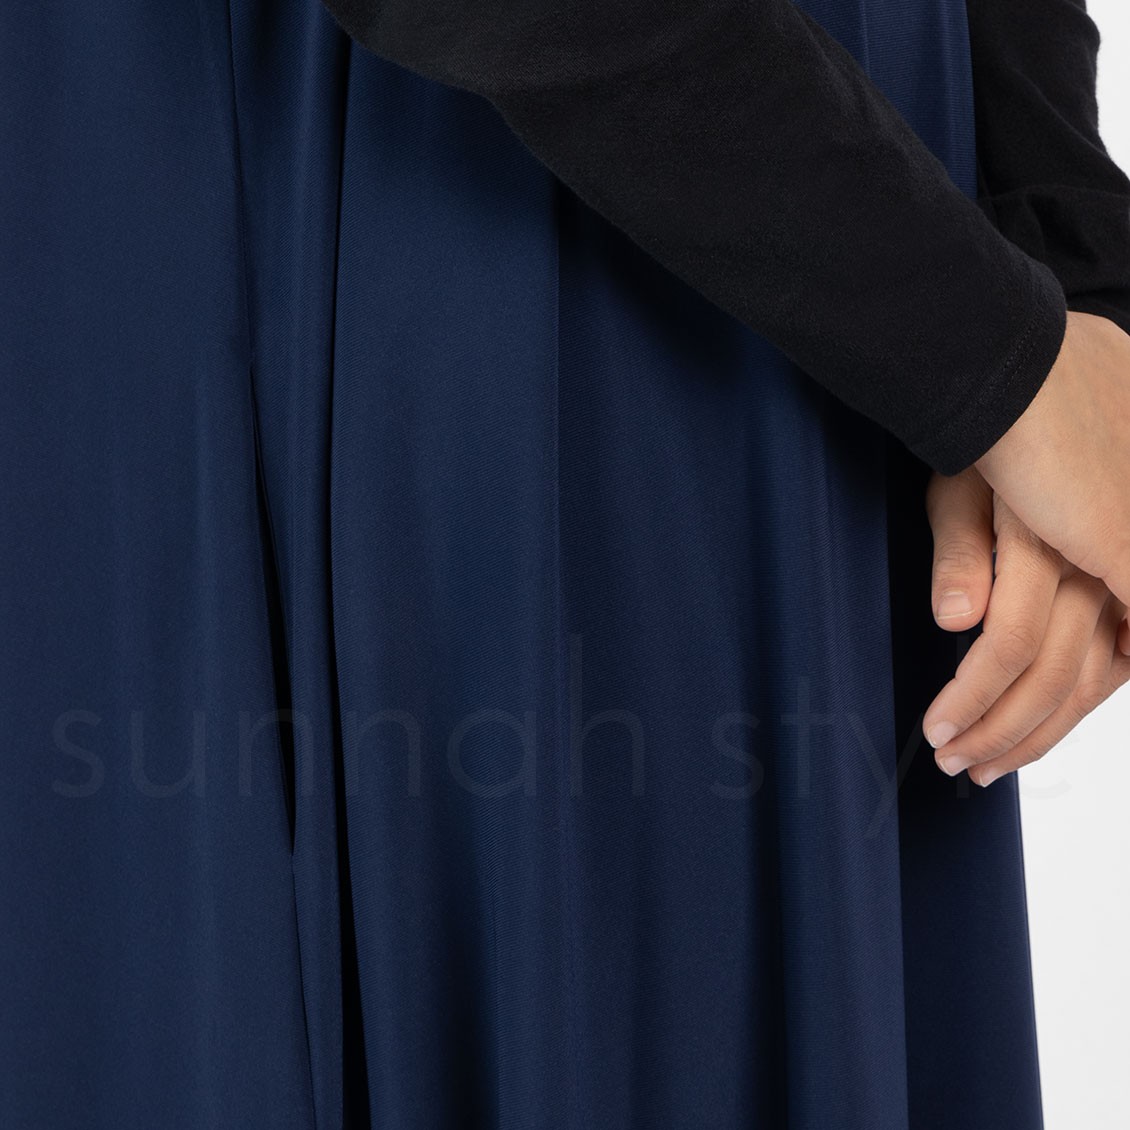 Sunnah Style Girls Sleeveless Jersey Abaya Navy Blue